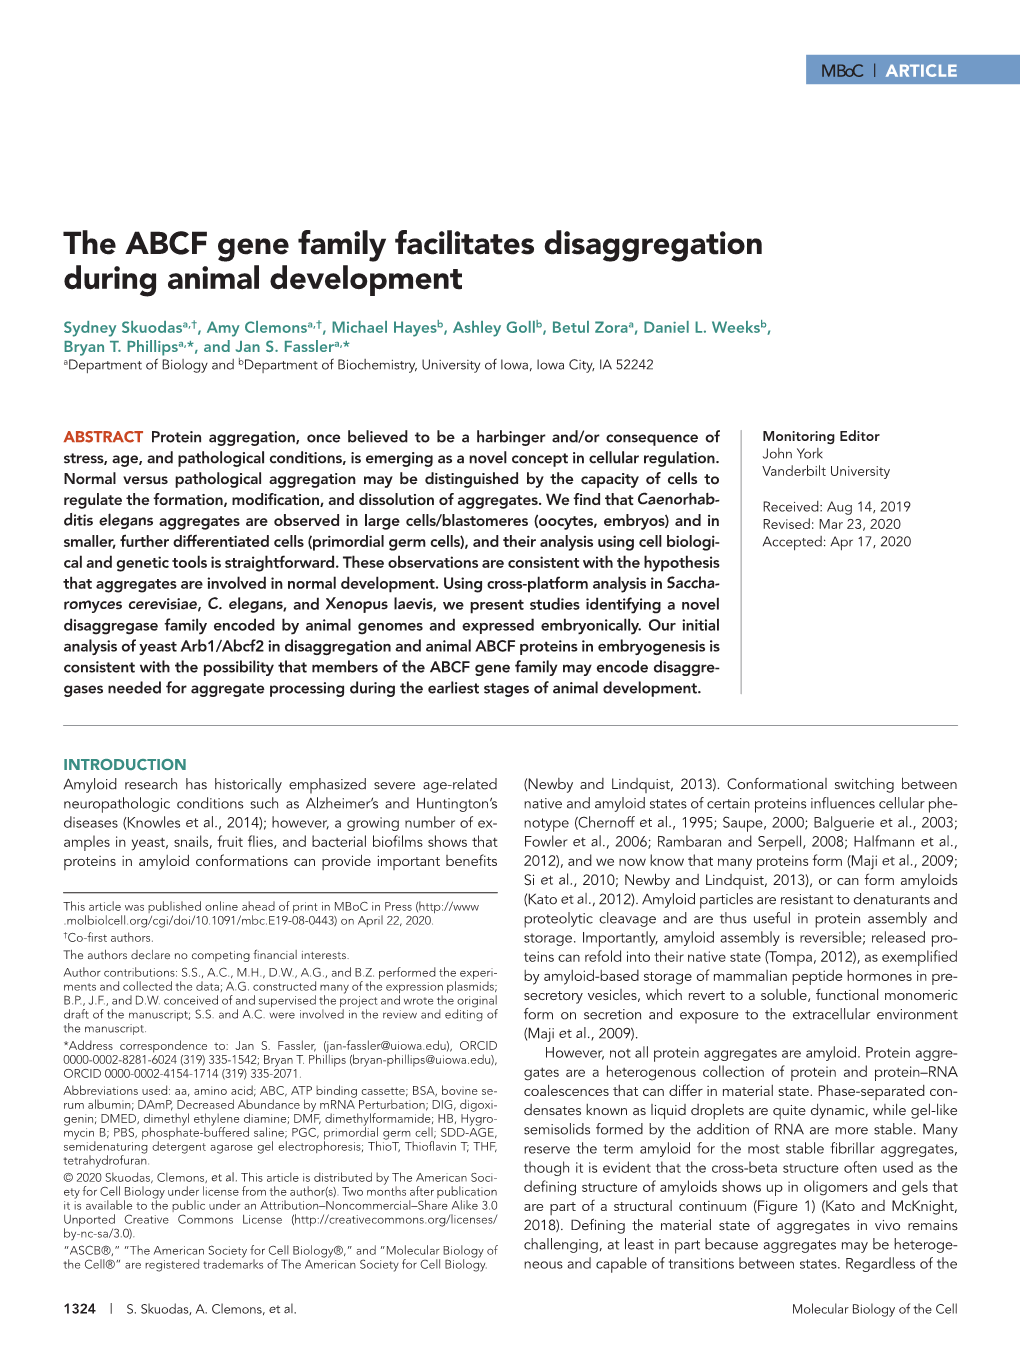 The ABCF Gene Family Facilitates Disaggregation During Animal Development